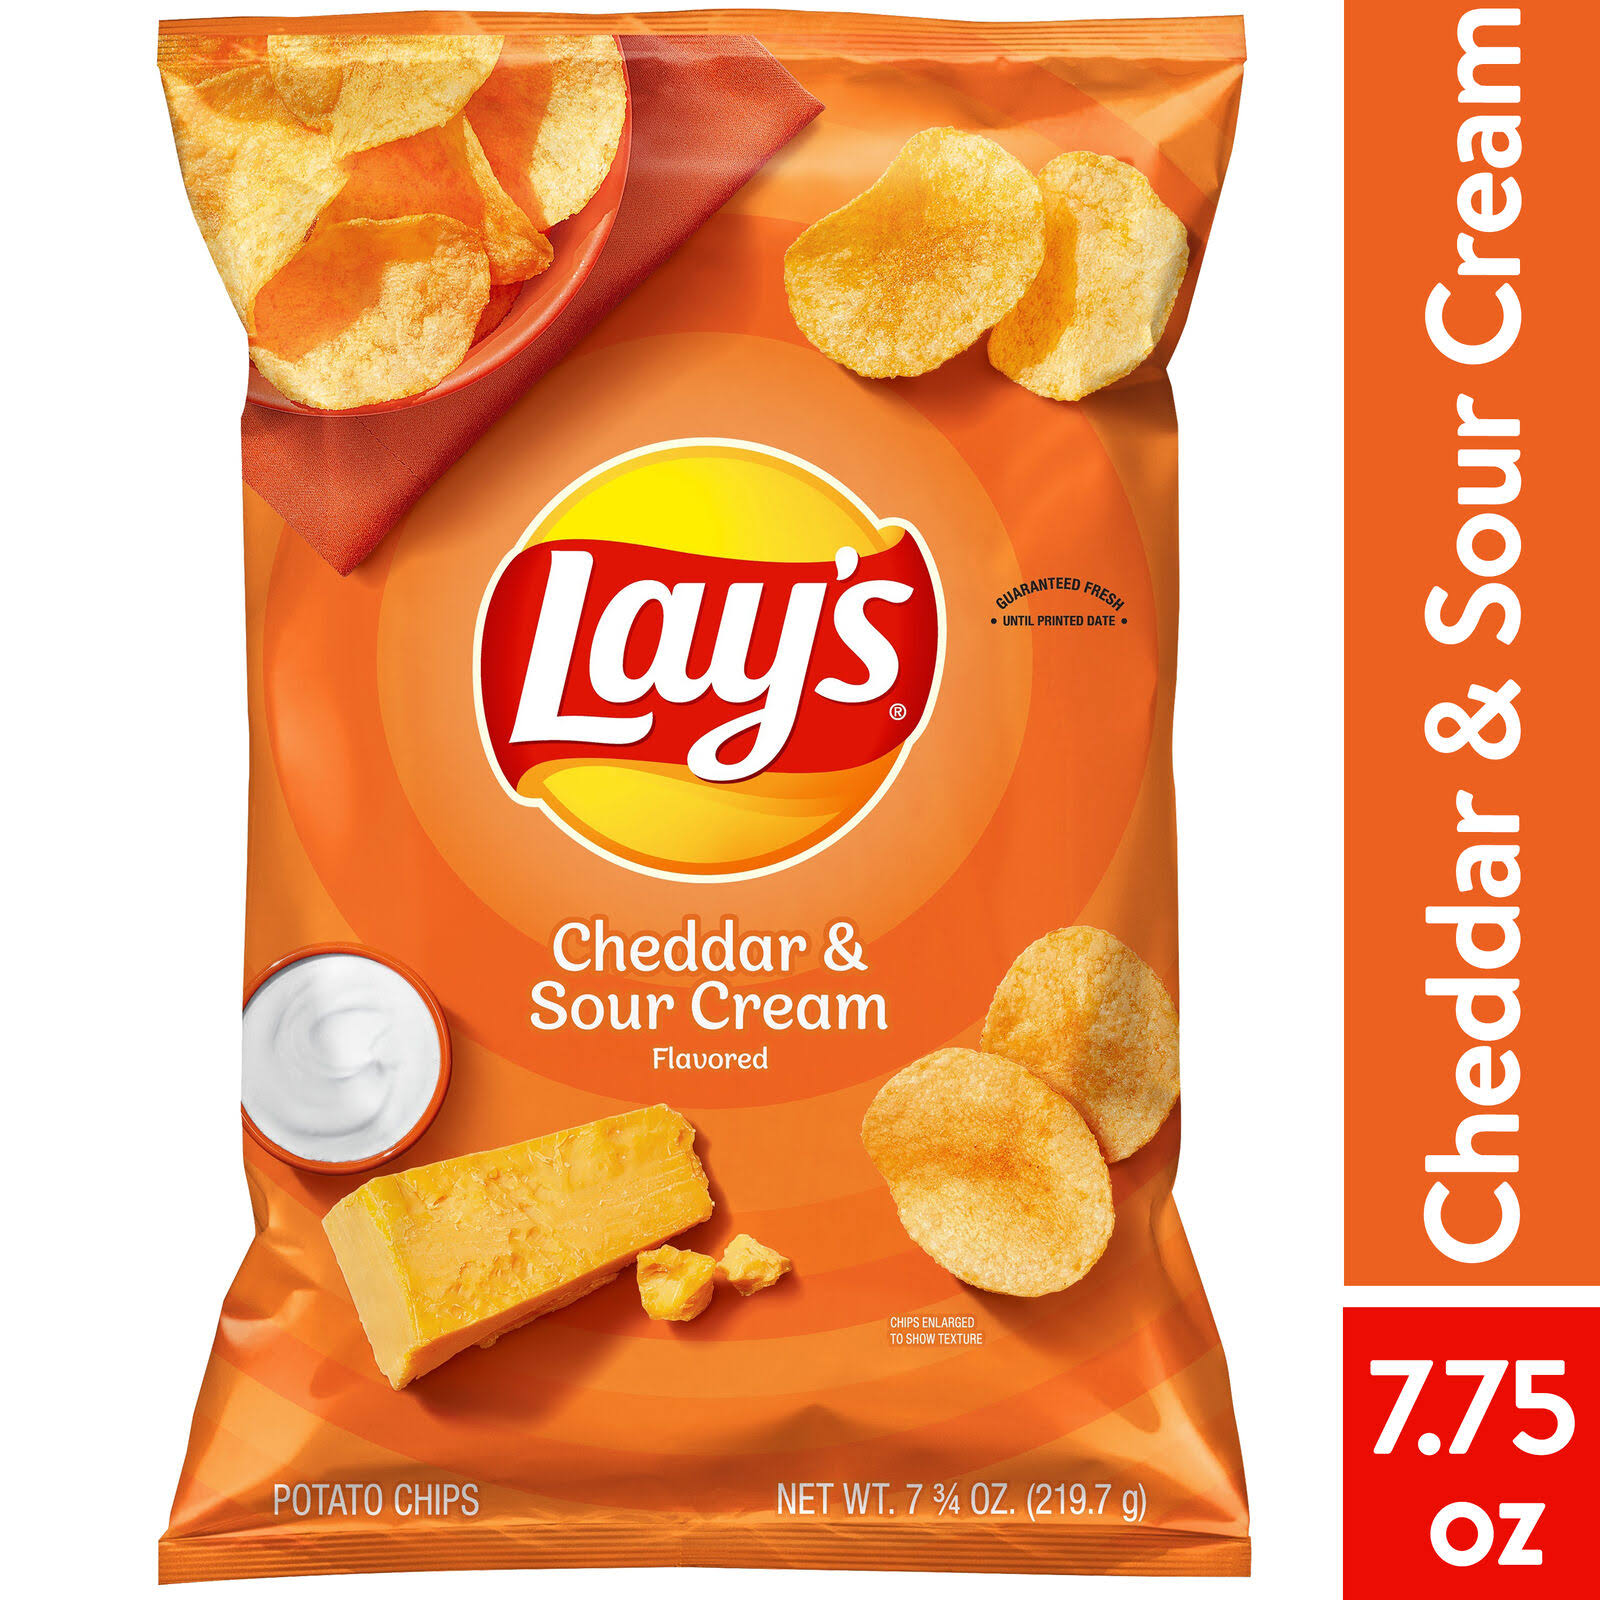 Lay's Potato Chip - Cheddar and Sour Cream, 7.75oz